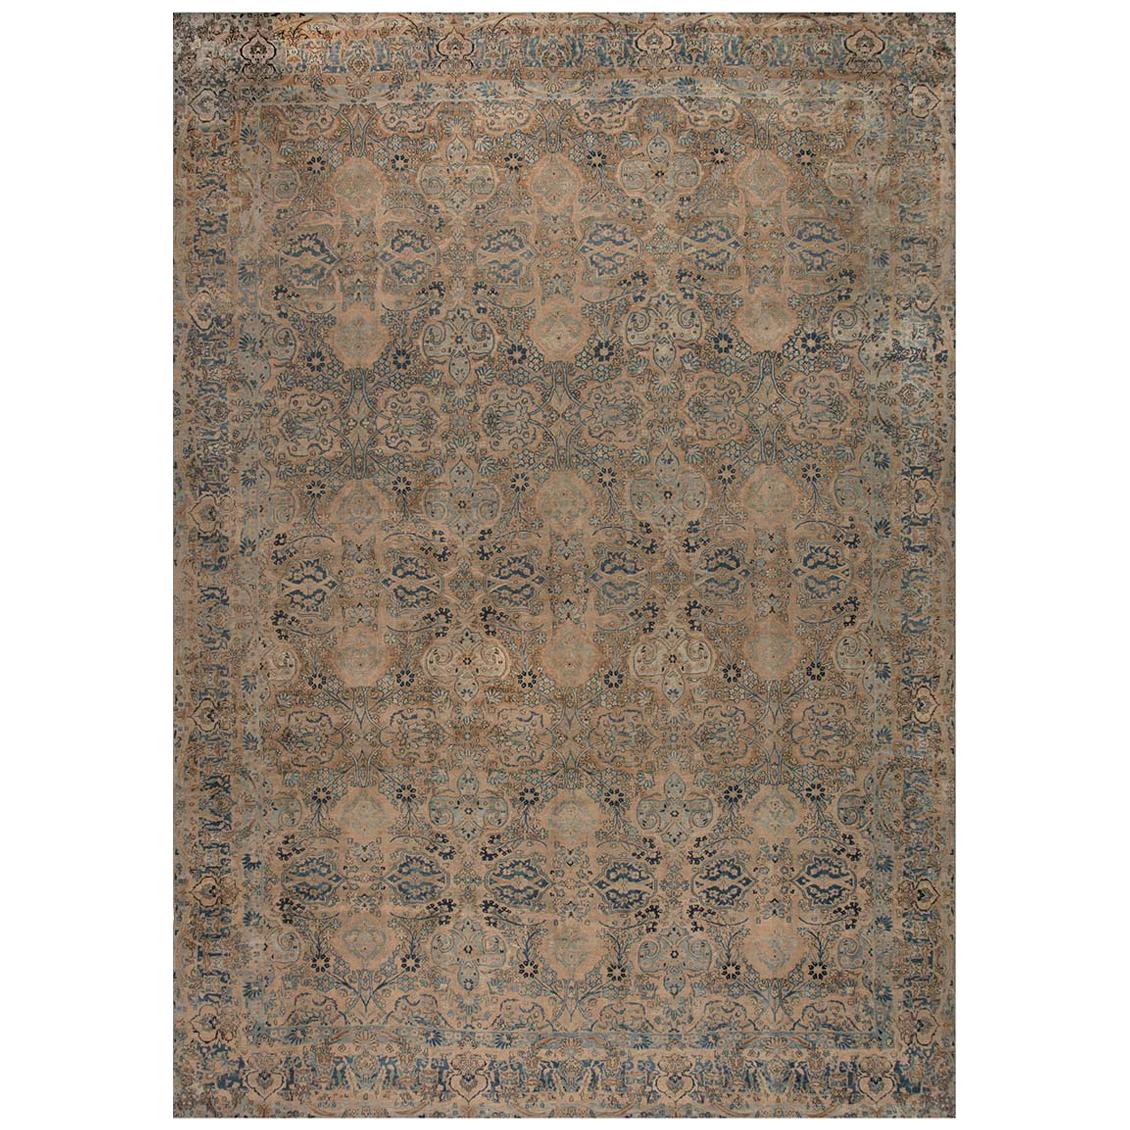 Authentic 19th Century Persian Kirman Carpet For Sale